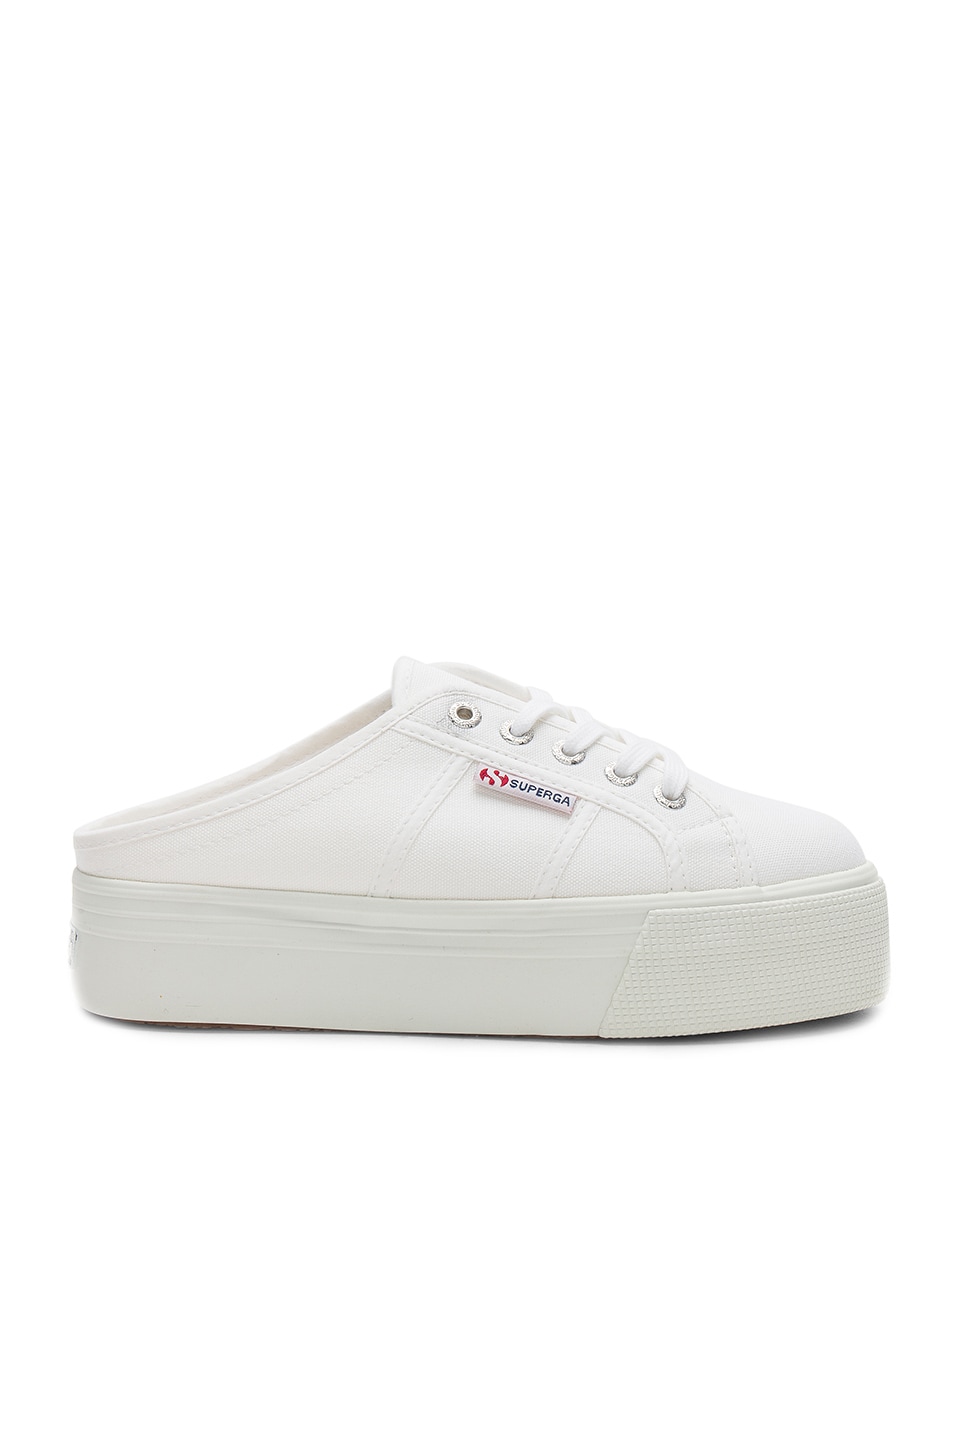 Superga 2790 Sabotcotw Sneaker in White | REVOLVE